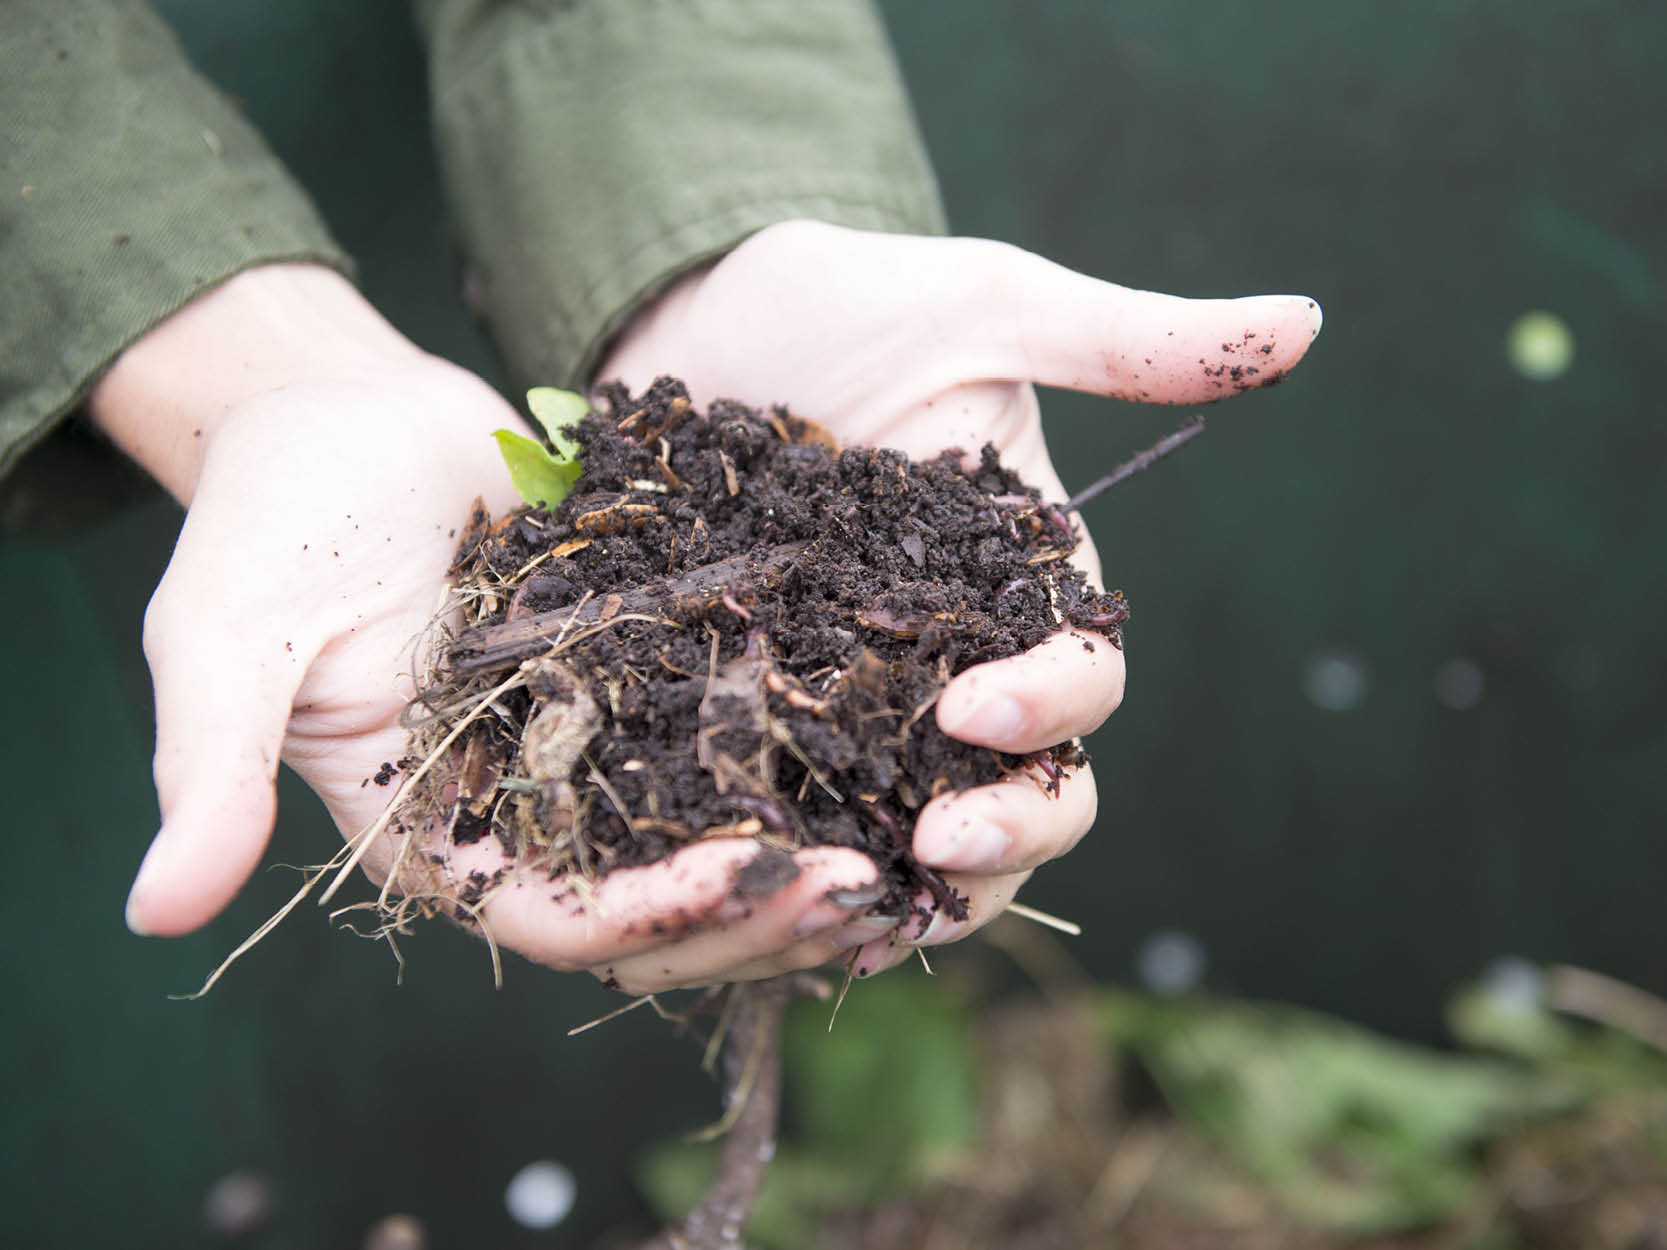 hands holding fresh dirt over a compost bin